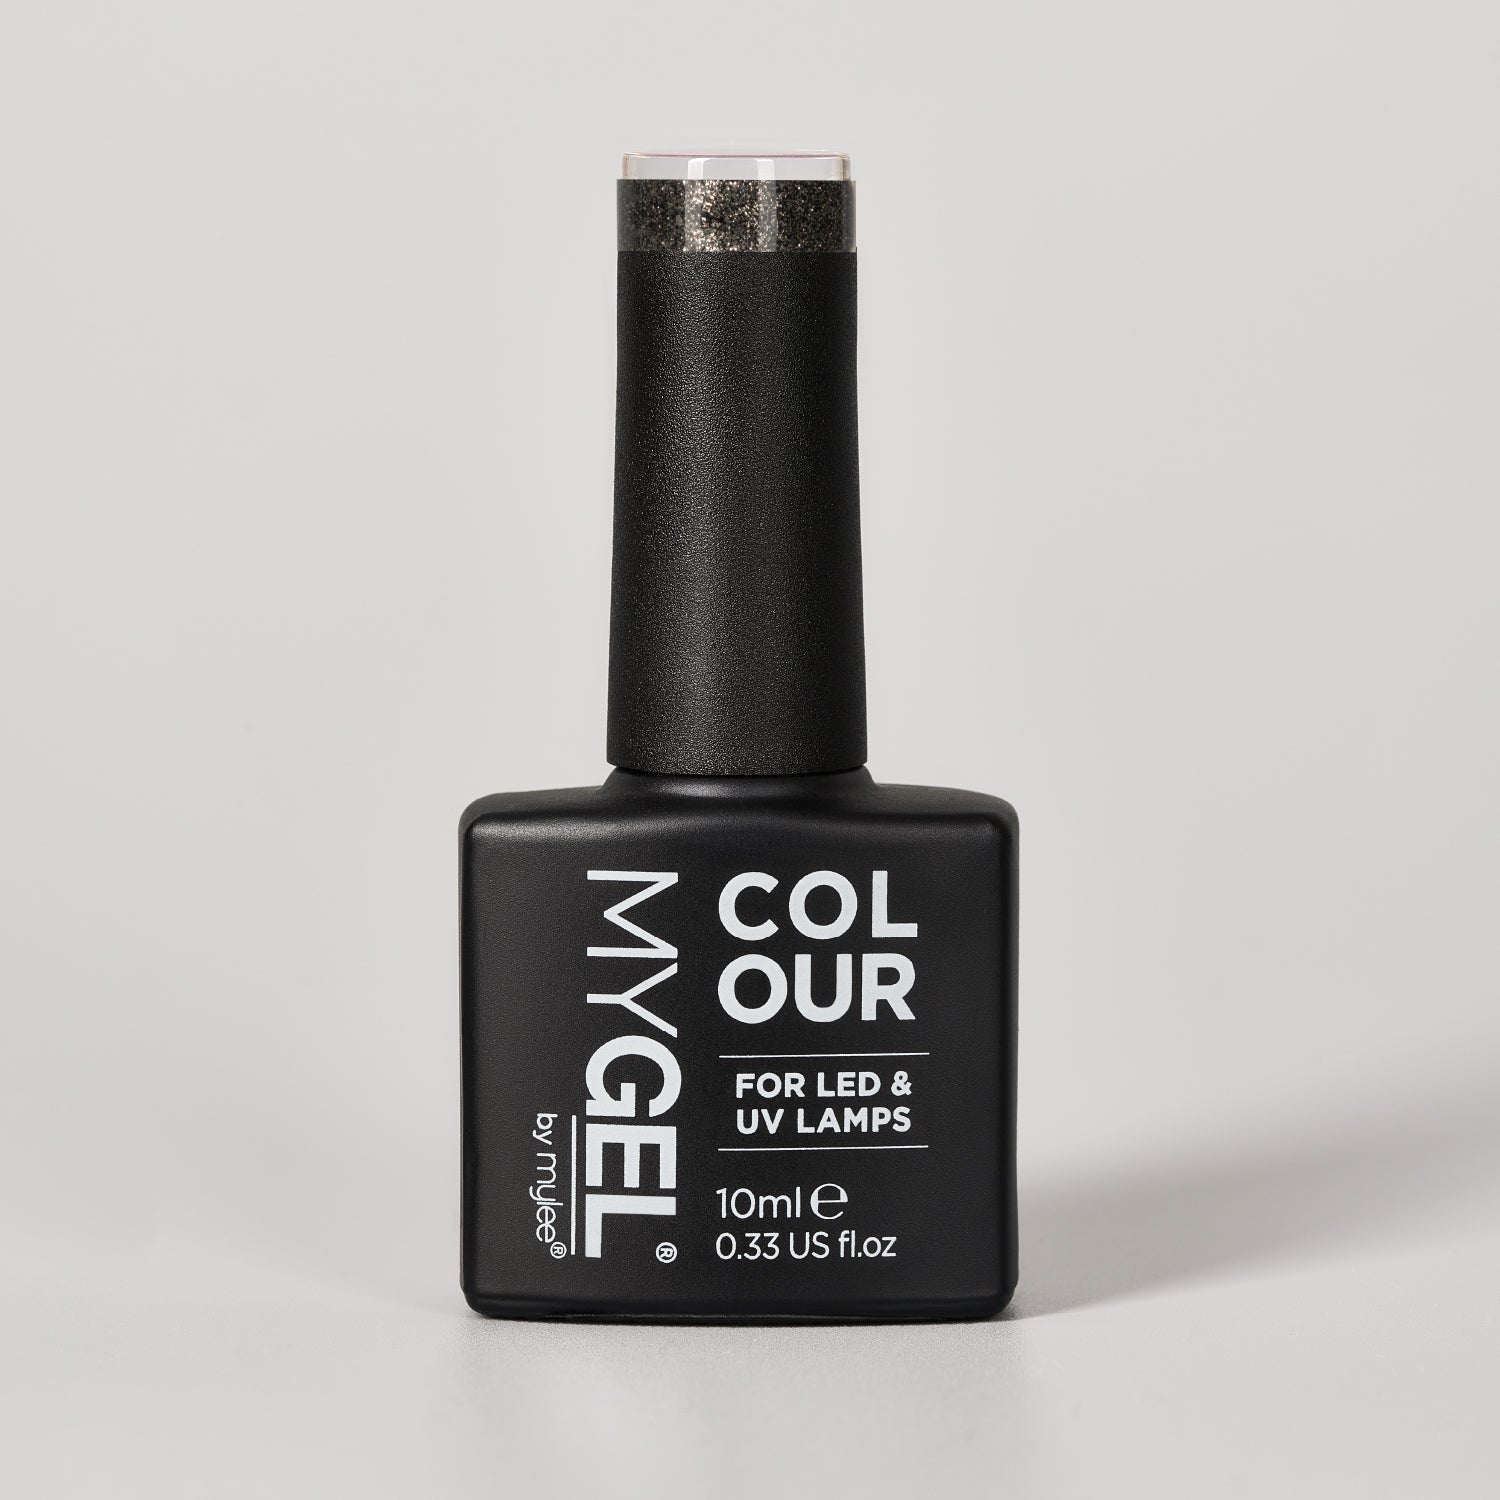 Image of Mylee Rock Hard LED/UV Glitter / Black Gel Nail Polish 10ml – Long Lasting At Home Manicure/Pedicure, High Gloss And Chip Free Wear Nail Varnish